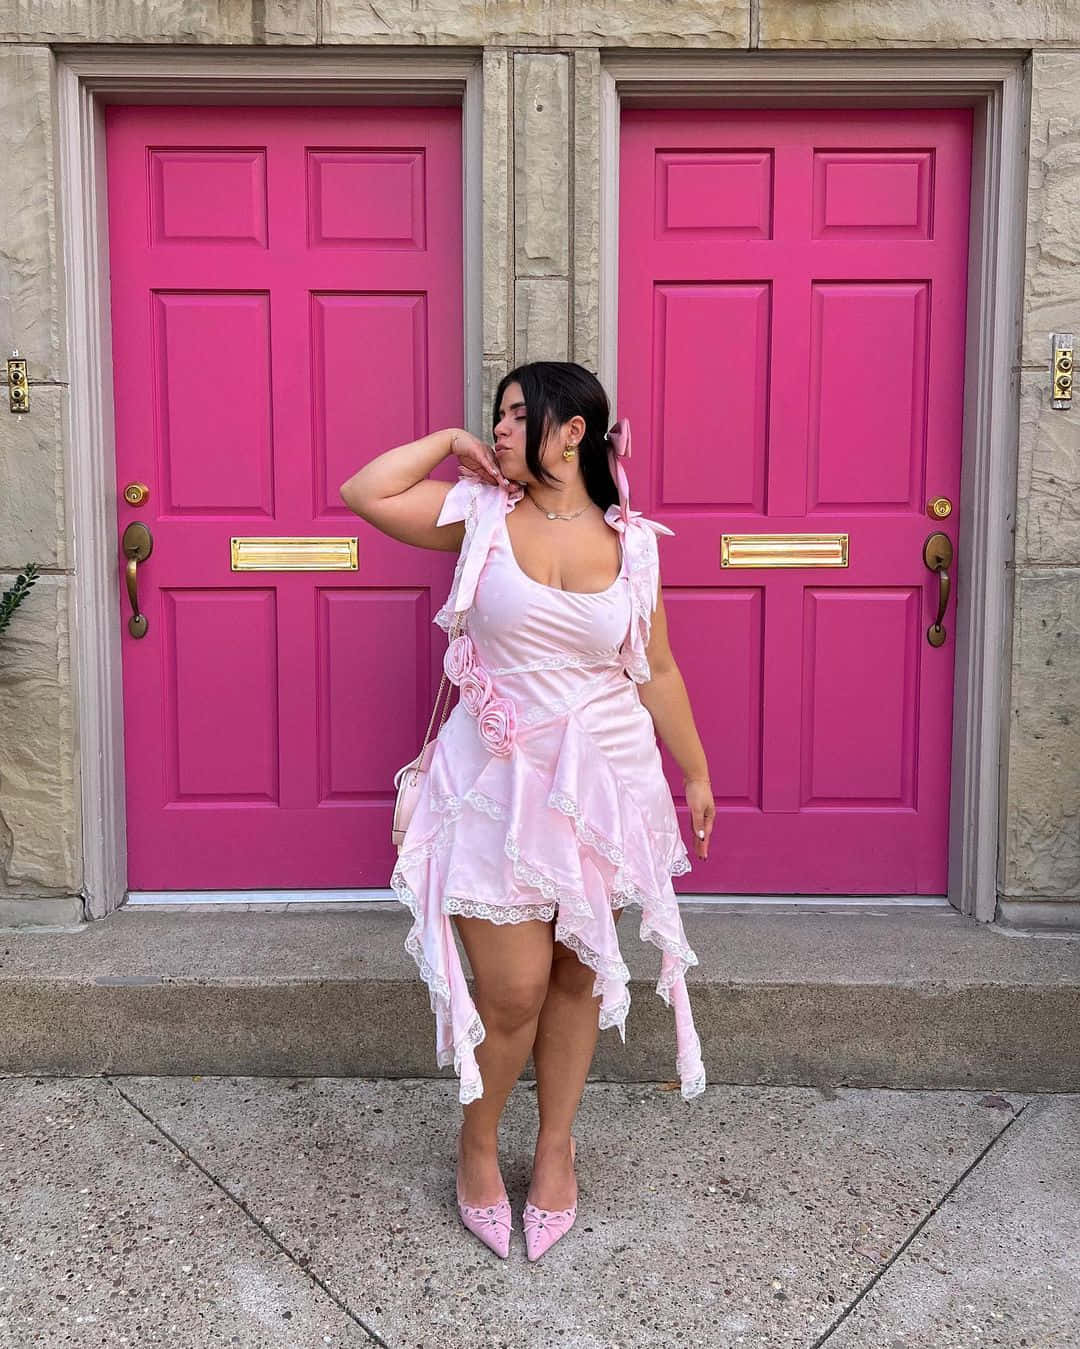 Womanin Pink Dress Before Pink Doors Wallpaper